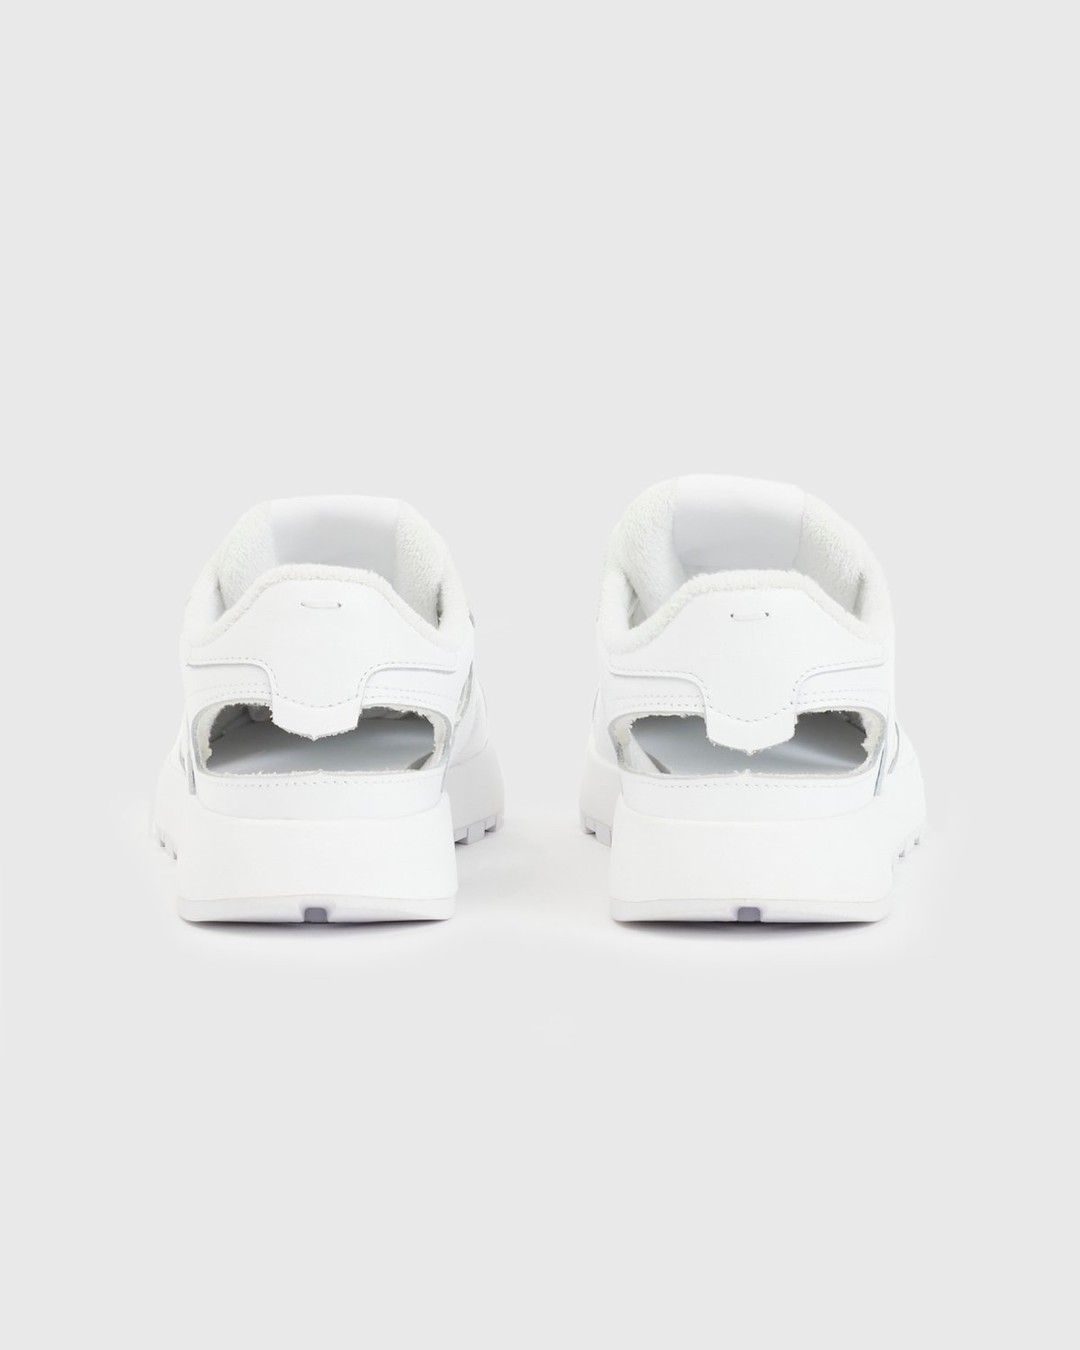 Maison Margiela x Reebok – Classic Leather Tabi Low White - Low Top Sneakers - White - Image 3